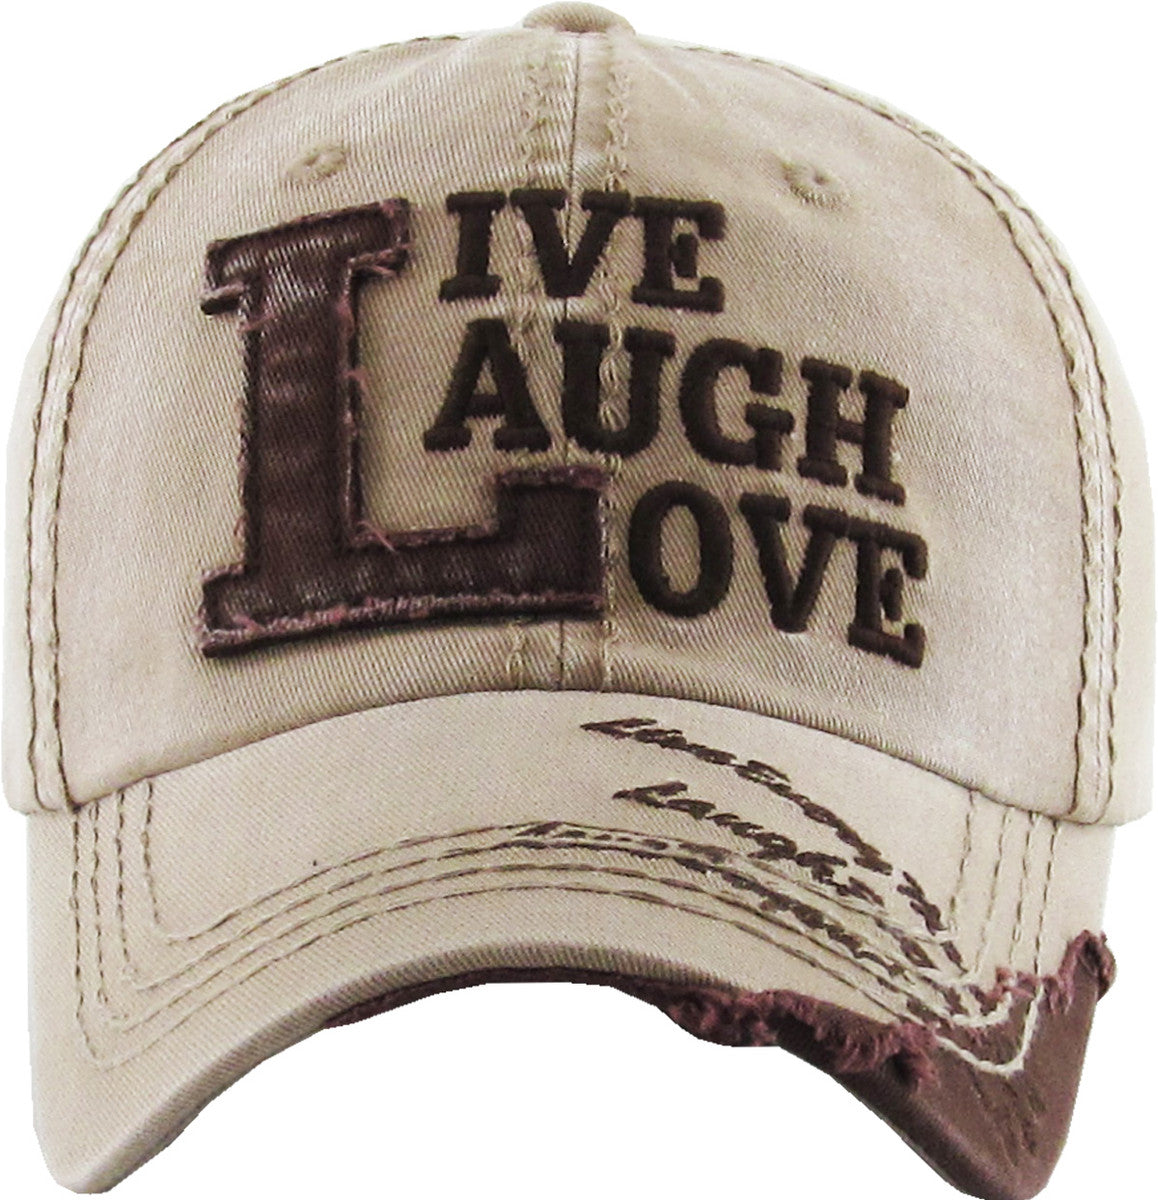 Live Laugh Love Vintage Hat - iNeedaHat.com